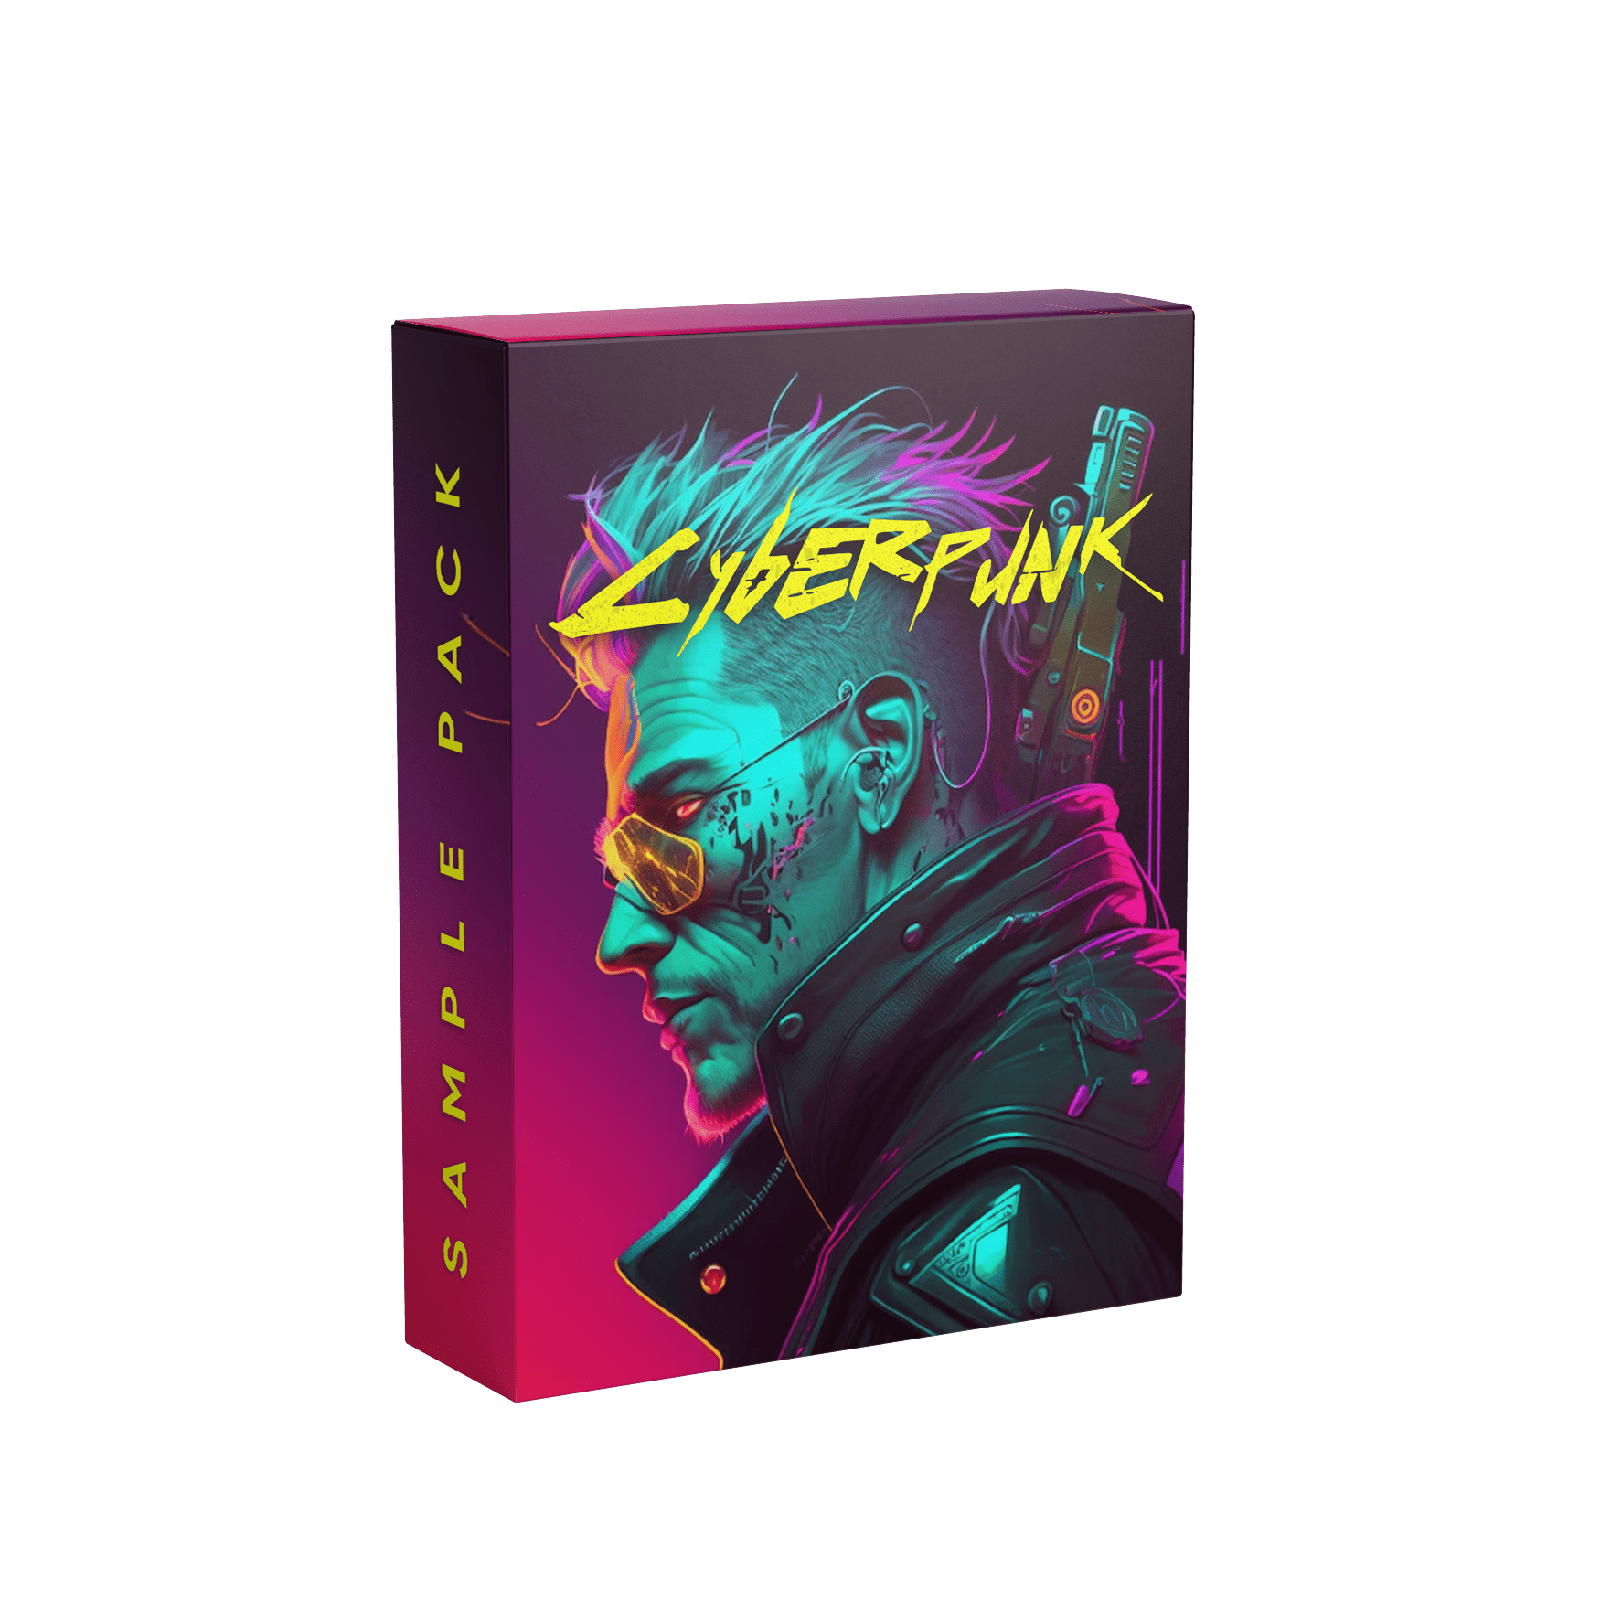 Cyberpunk Sample Pack Artwork